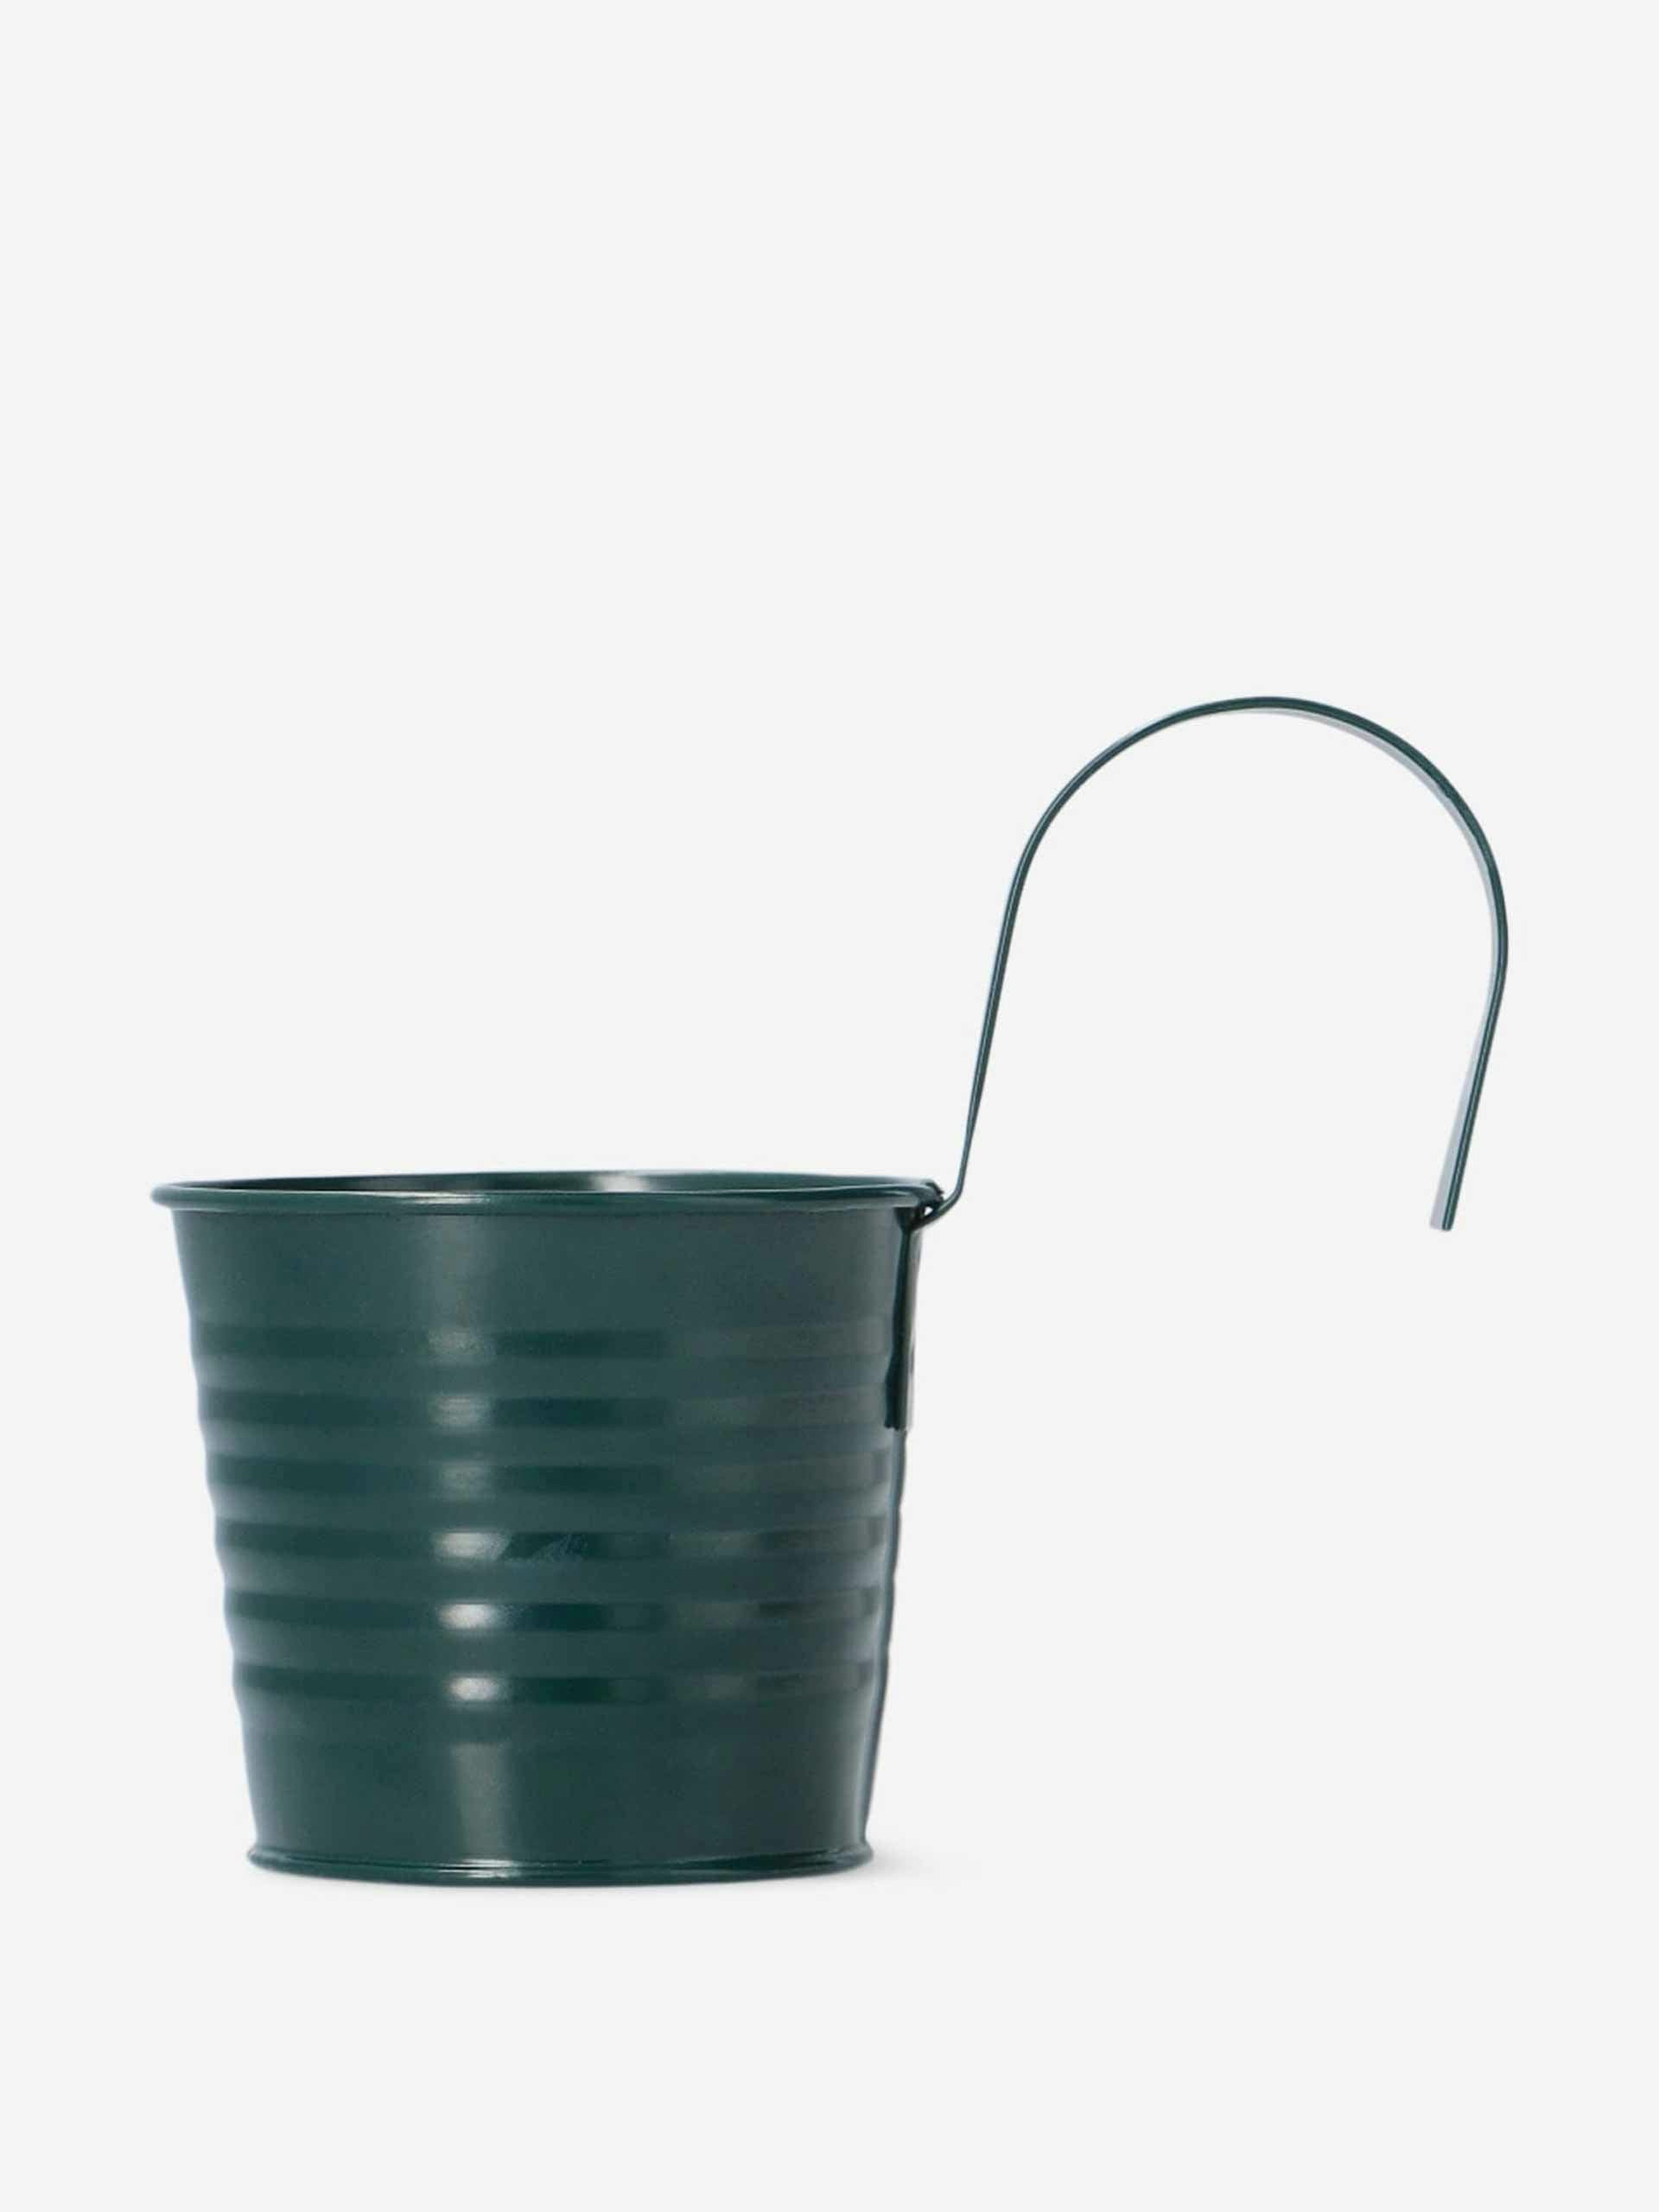 Hooked plant pot